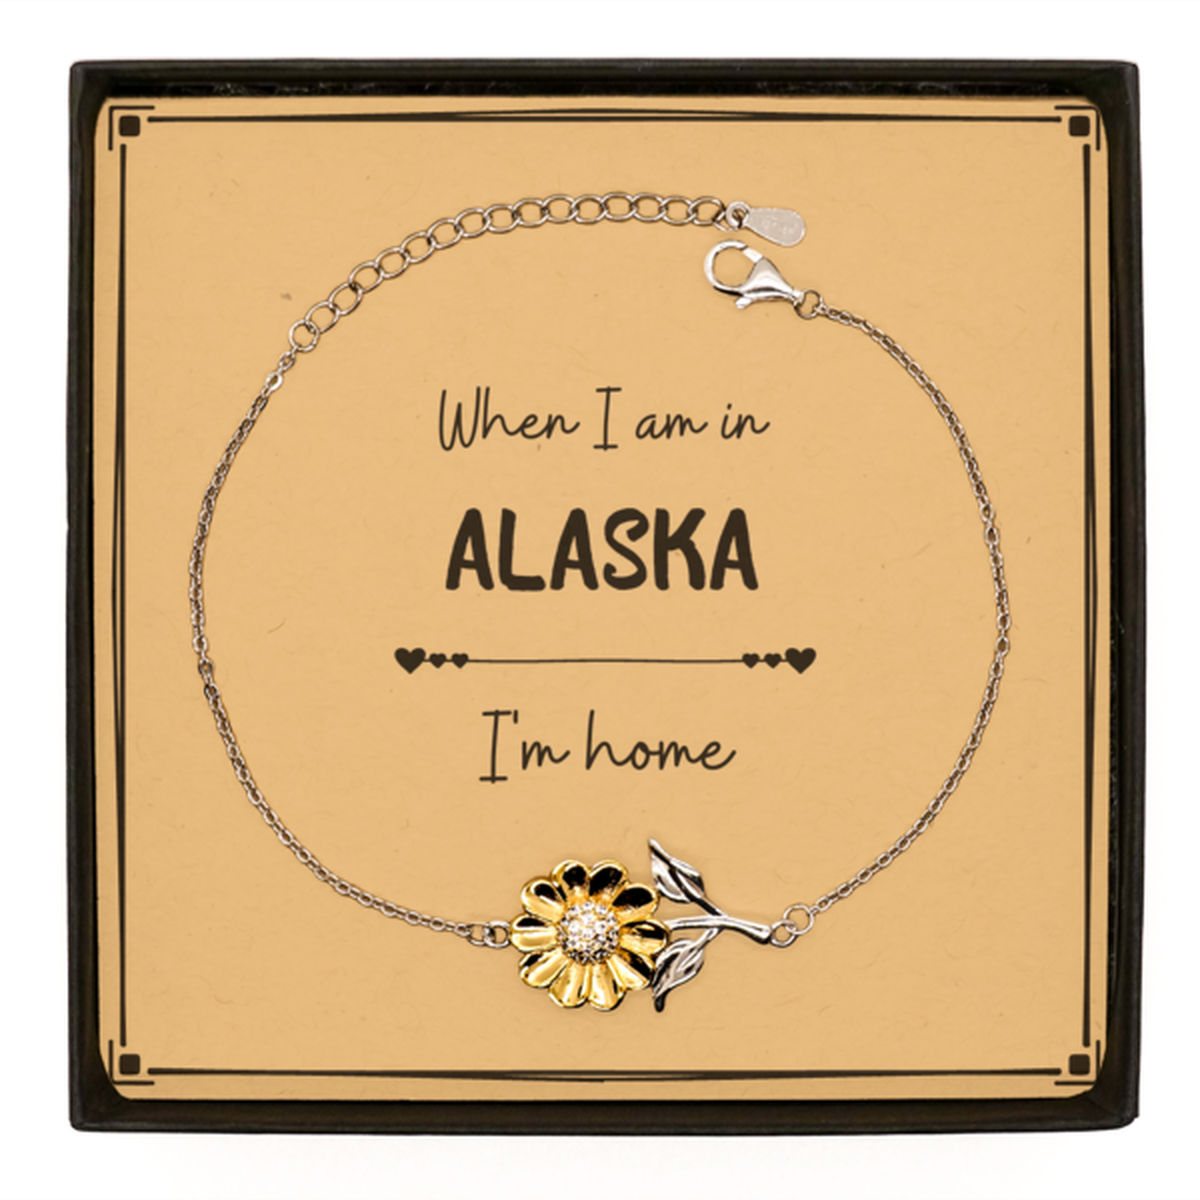 When I am in Alaska I'm home Sunflower Bracelet, Message Card Gifts For Alaska, State Alaska Birthday Gifts for Friends Coworker